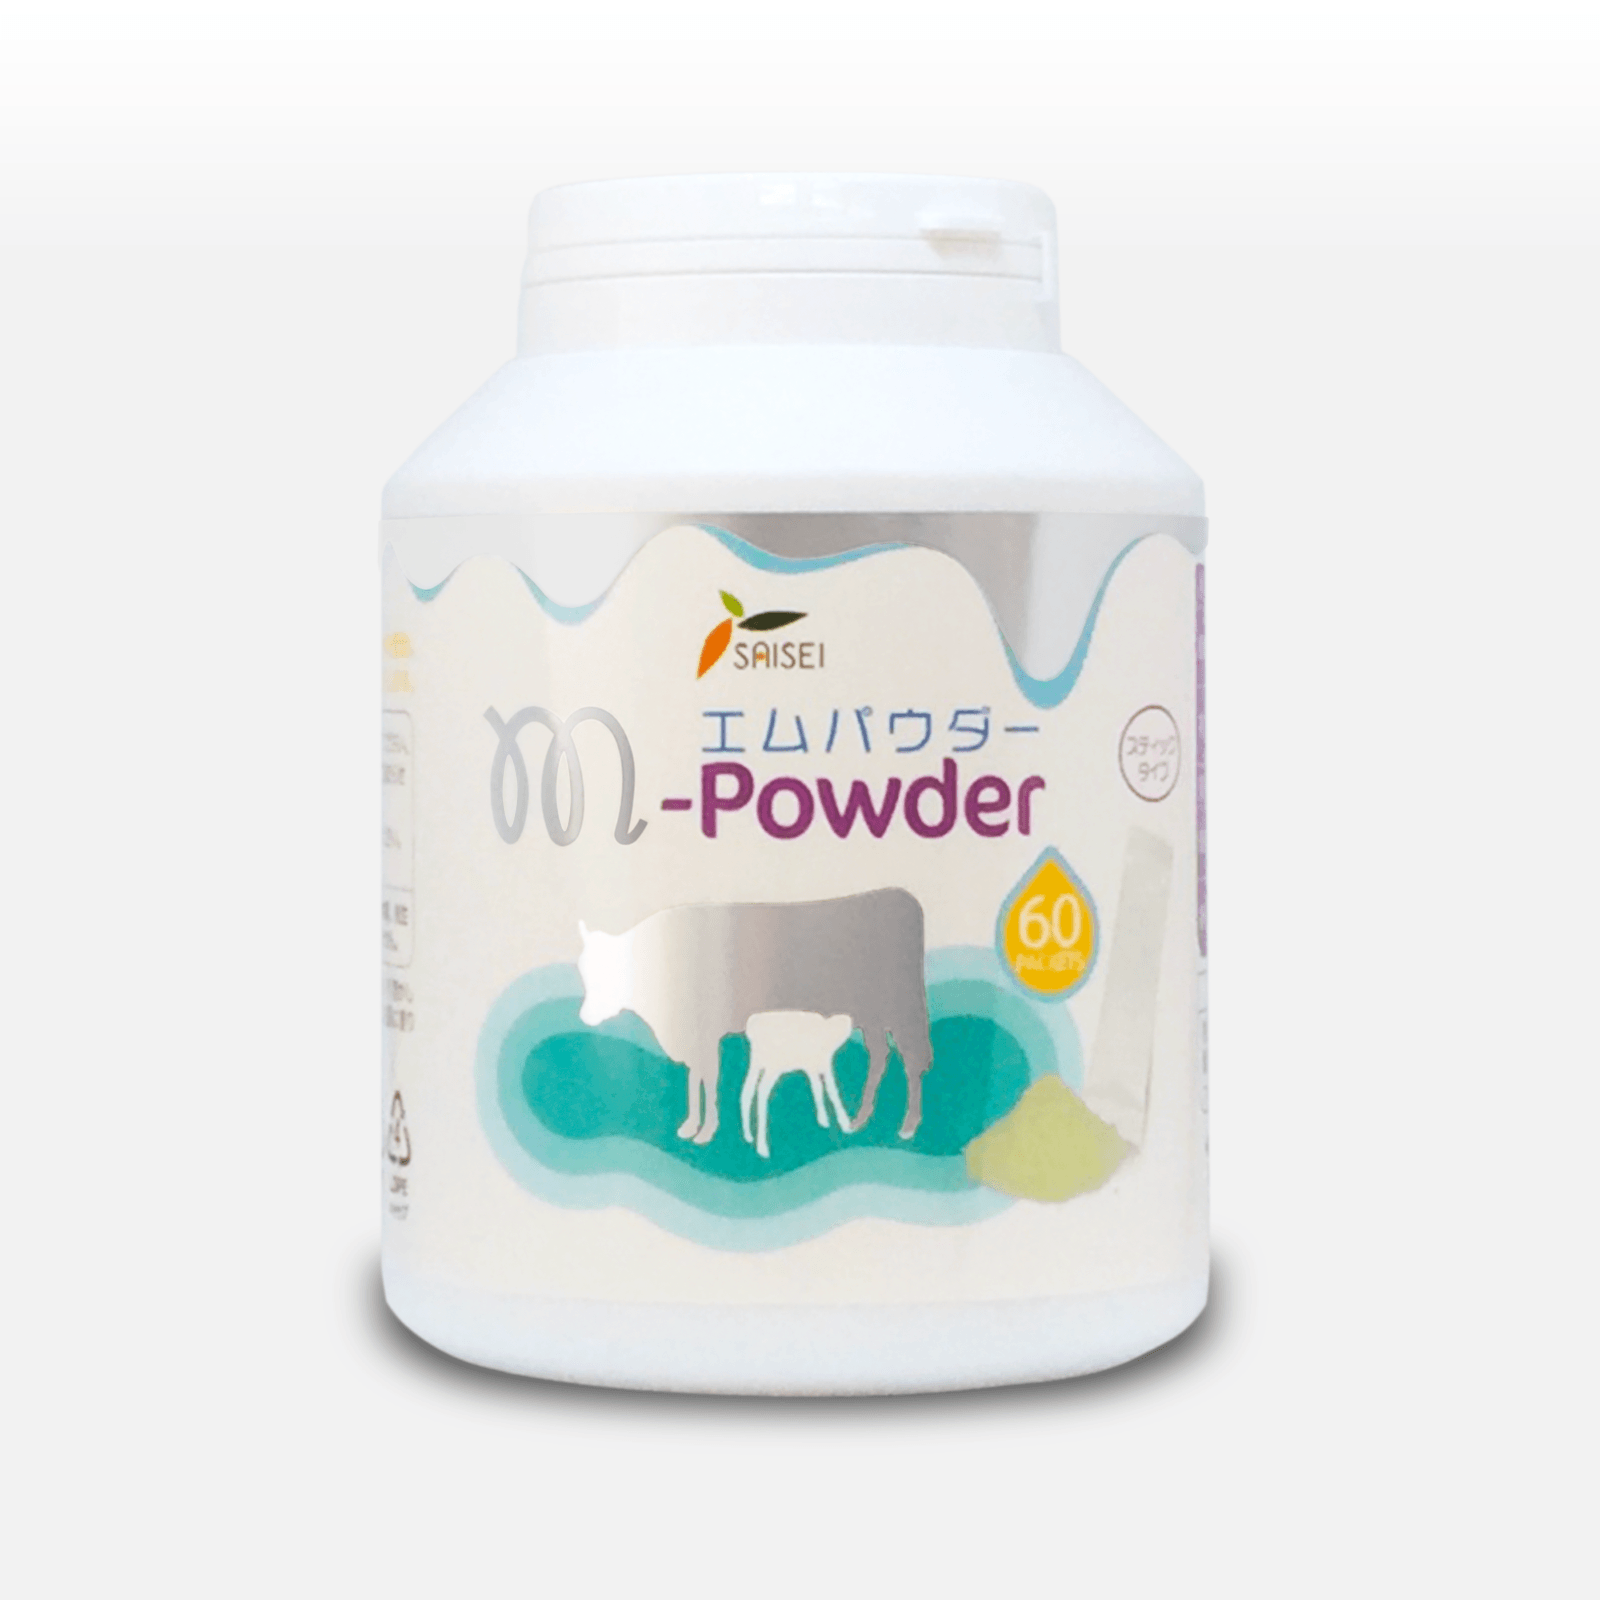 M-Powder